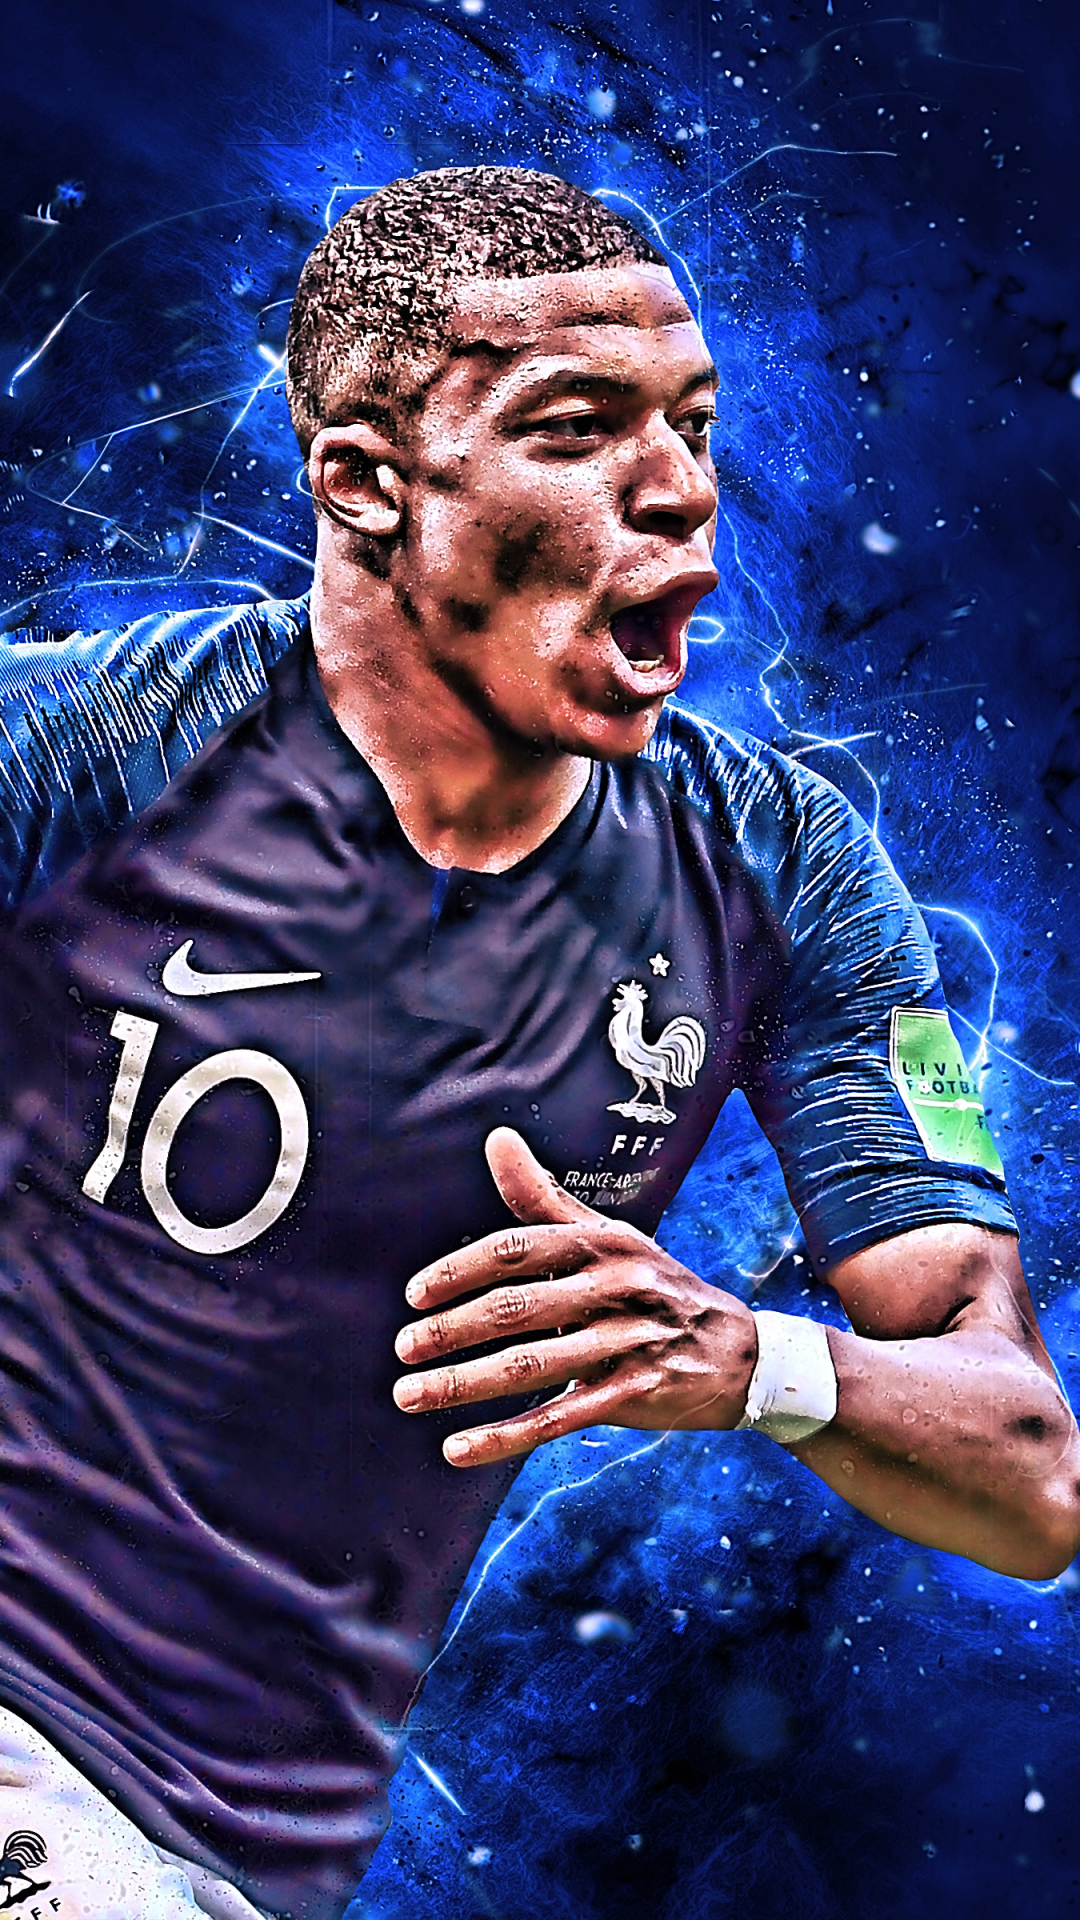 Kylian Mbappe  France Wallpaper by Achu17 on DeviantArt altimage   Soccer players Kylian mbappé France national team